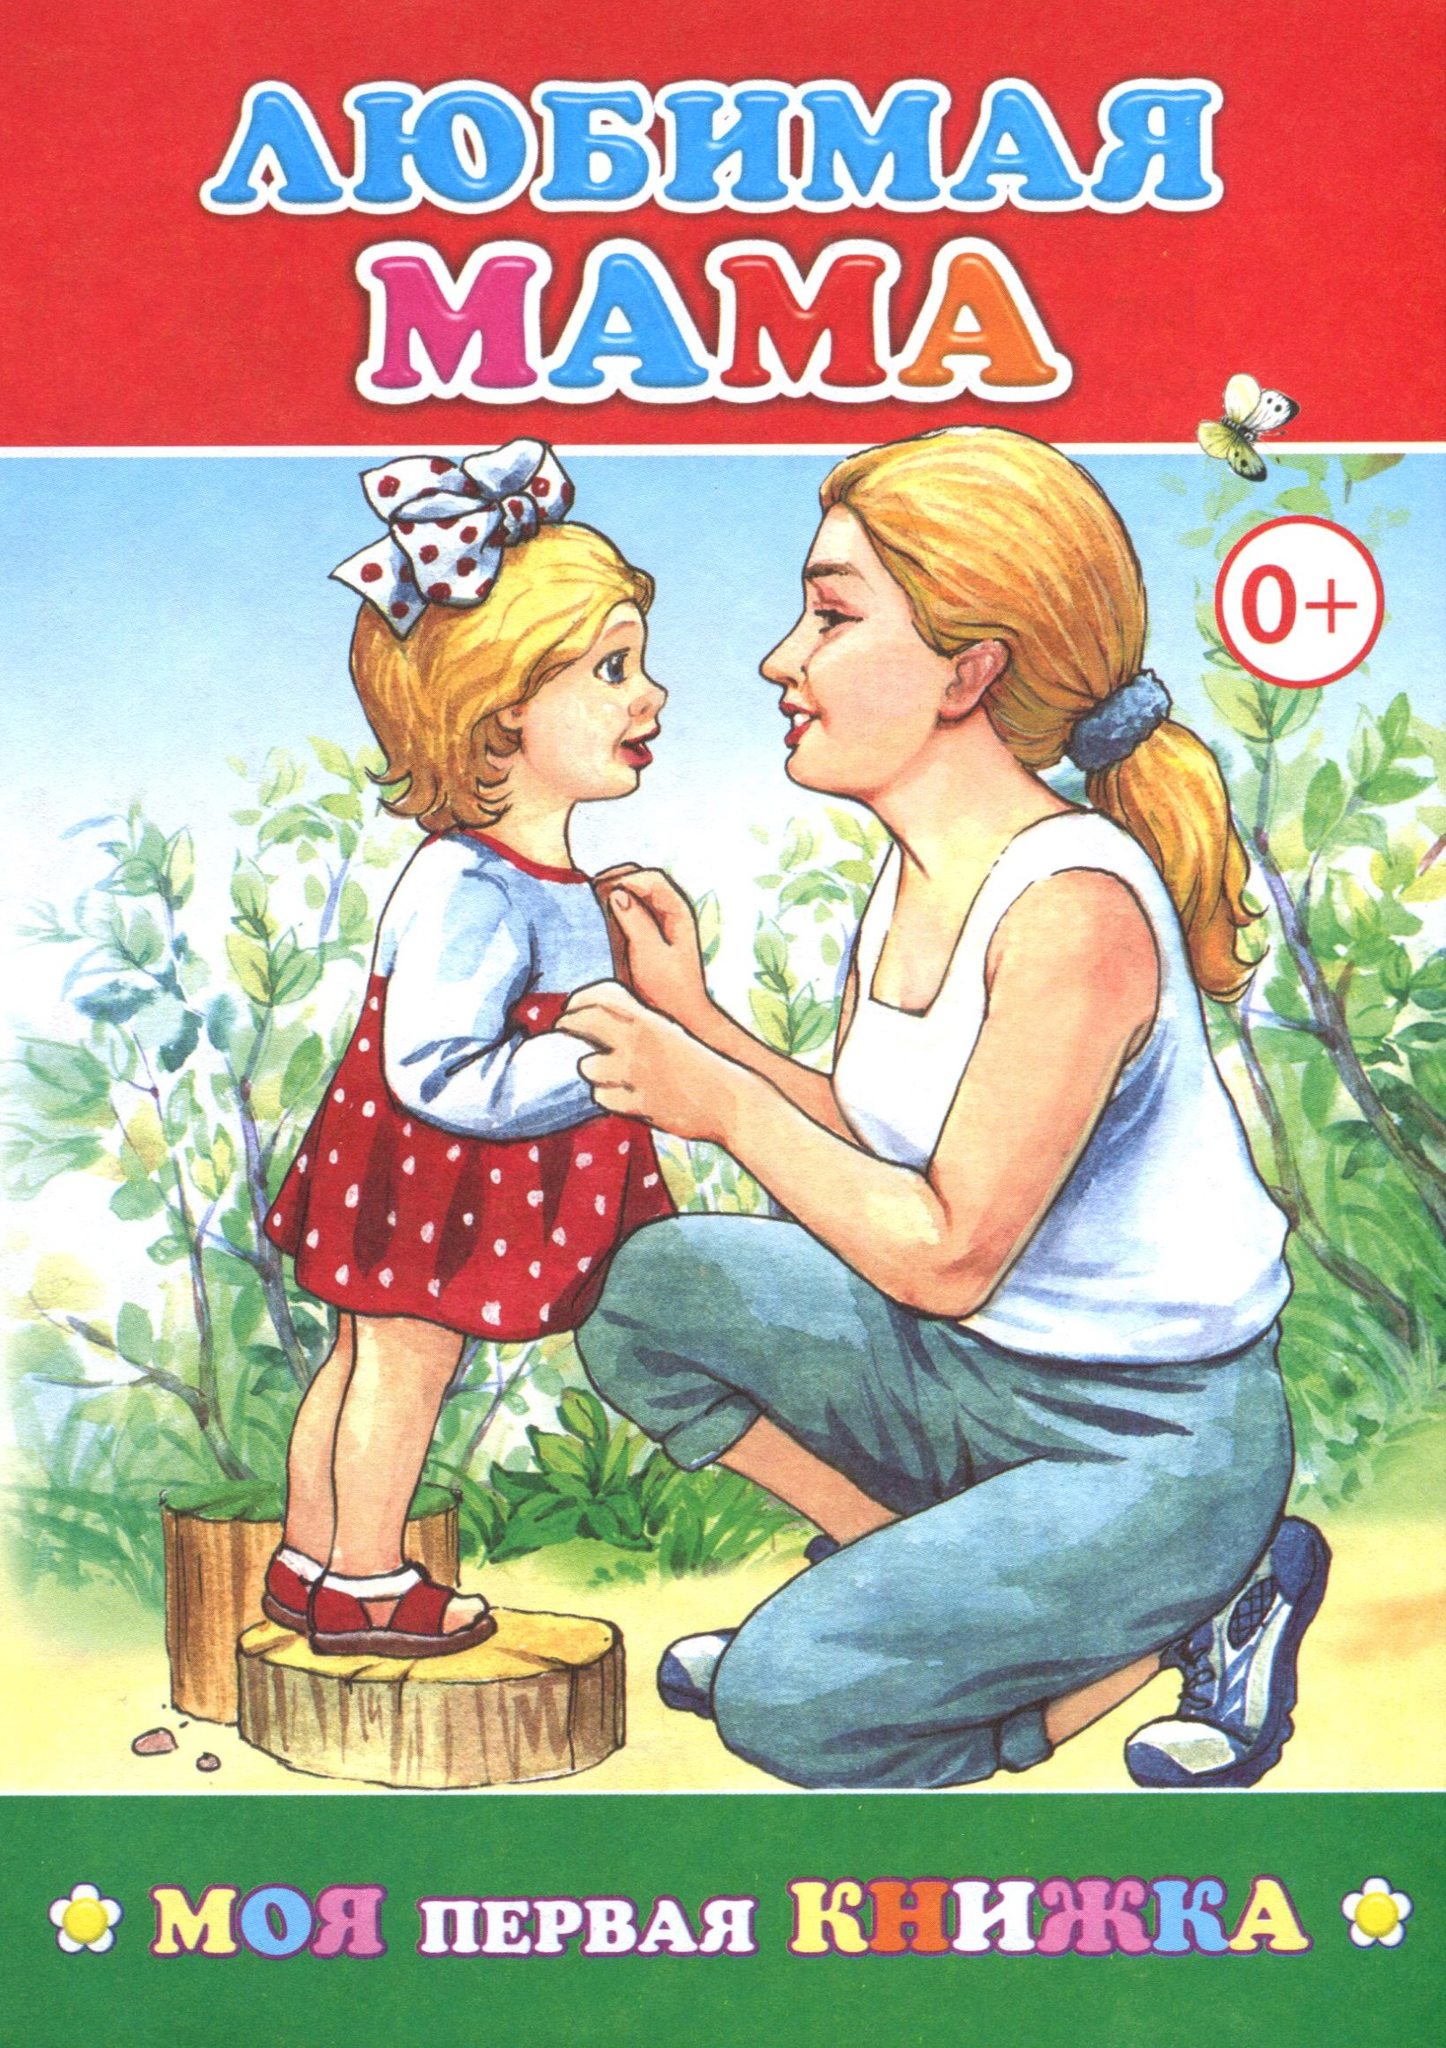 Книги обожаю. Книги о маме. Книги о маме для детей. Детские книжки про маму. Детские книги о маме.